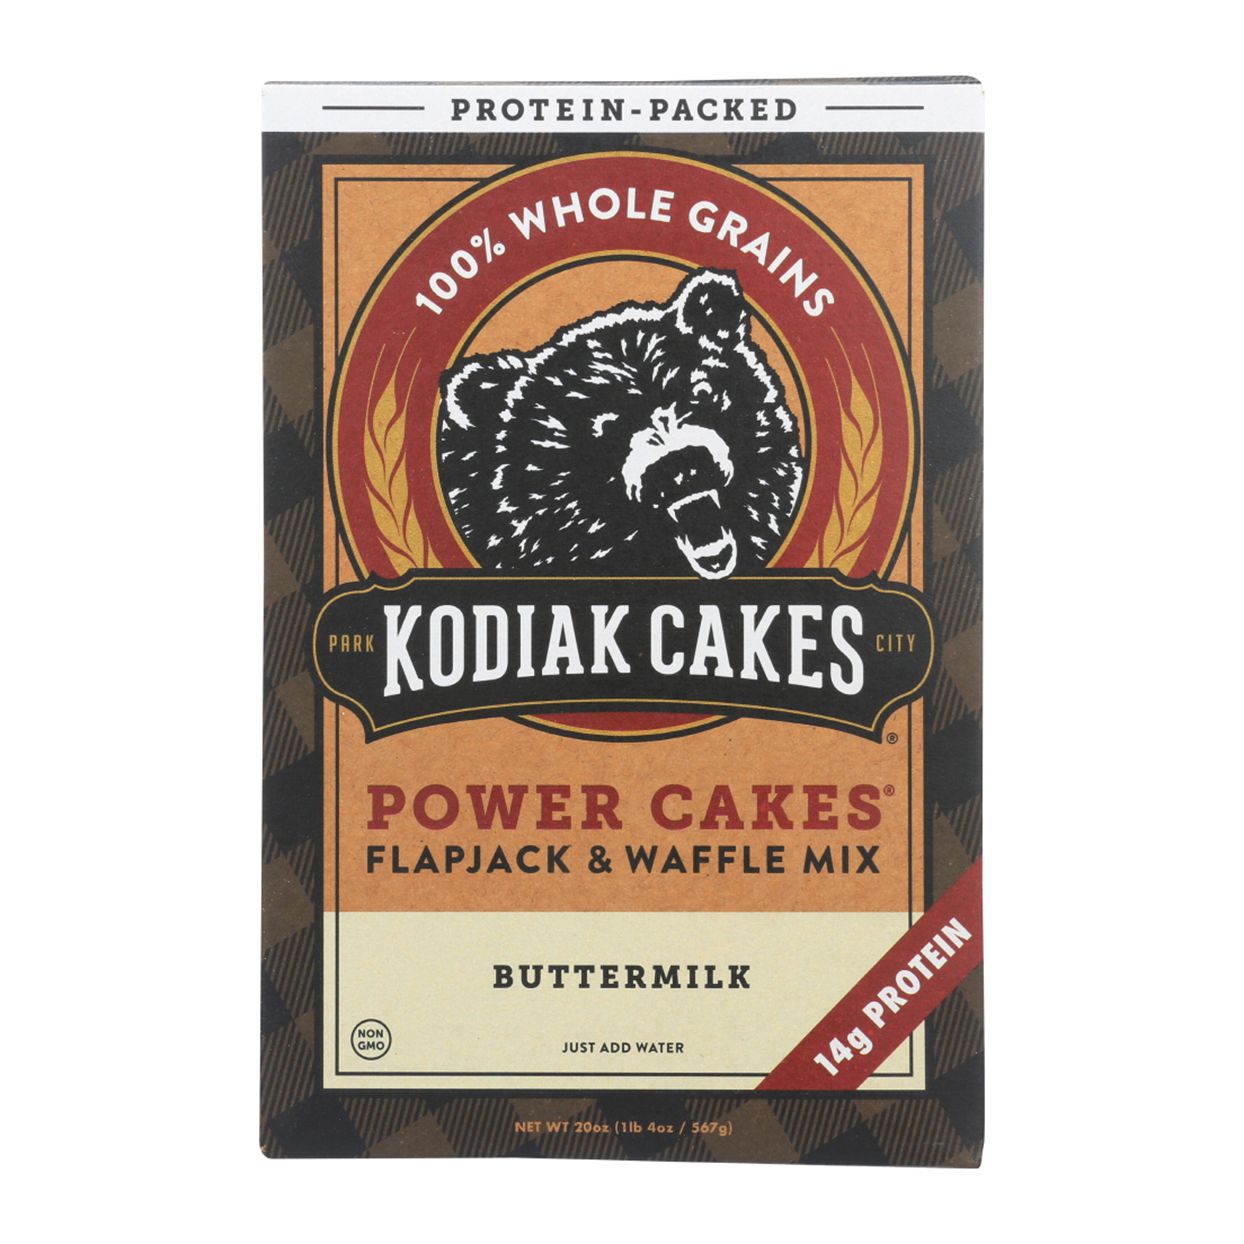 Kodiak Cakes' Buttermilk Power Cakes